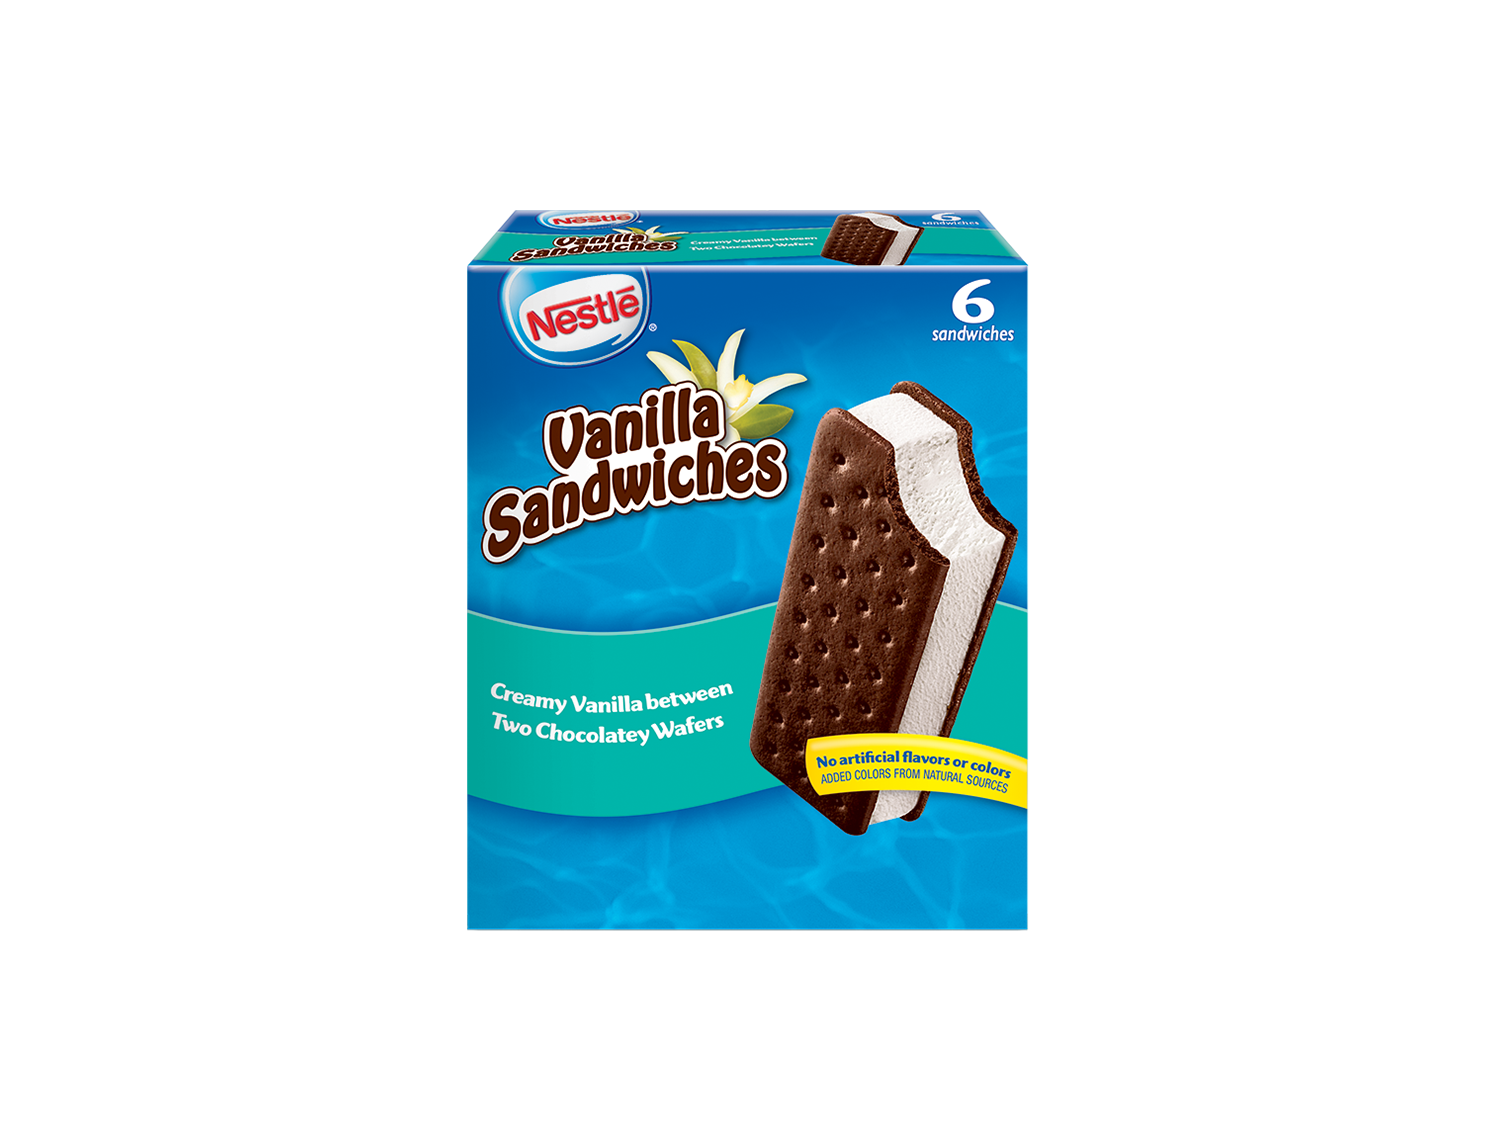 Box of 6 Nestle vanilla ice cream sandwiches